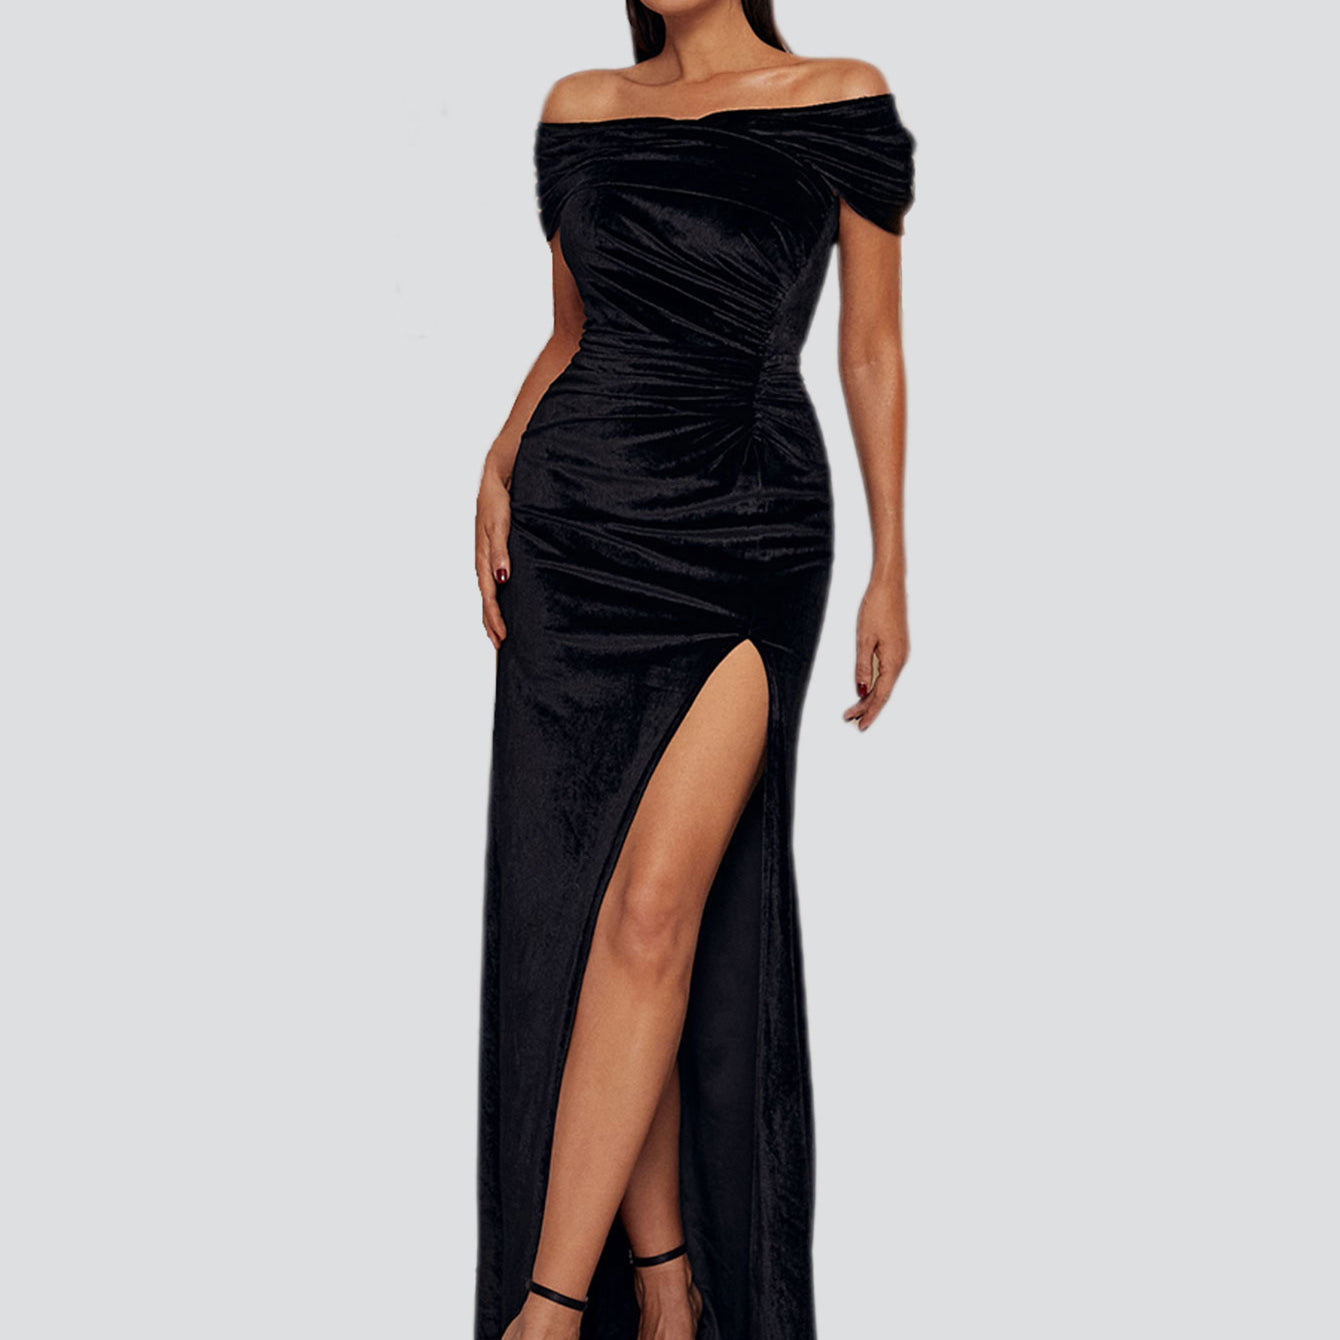 Off The Shoulder Velvet Sexy Black Prom Dress